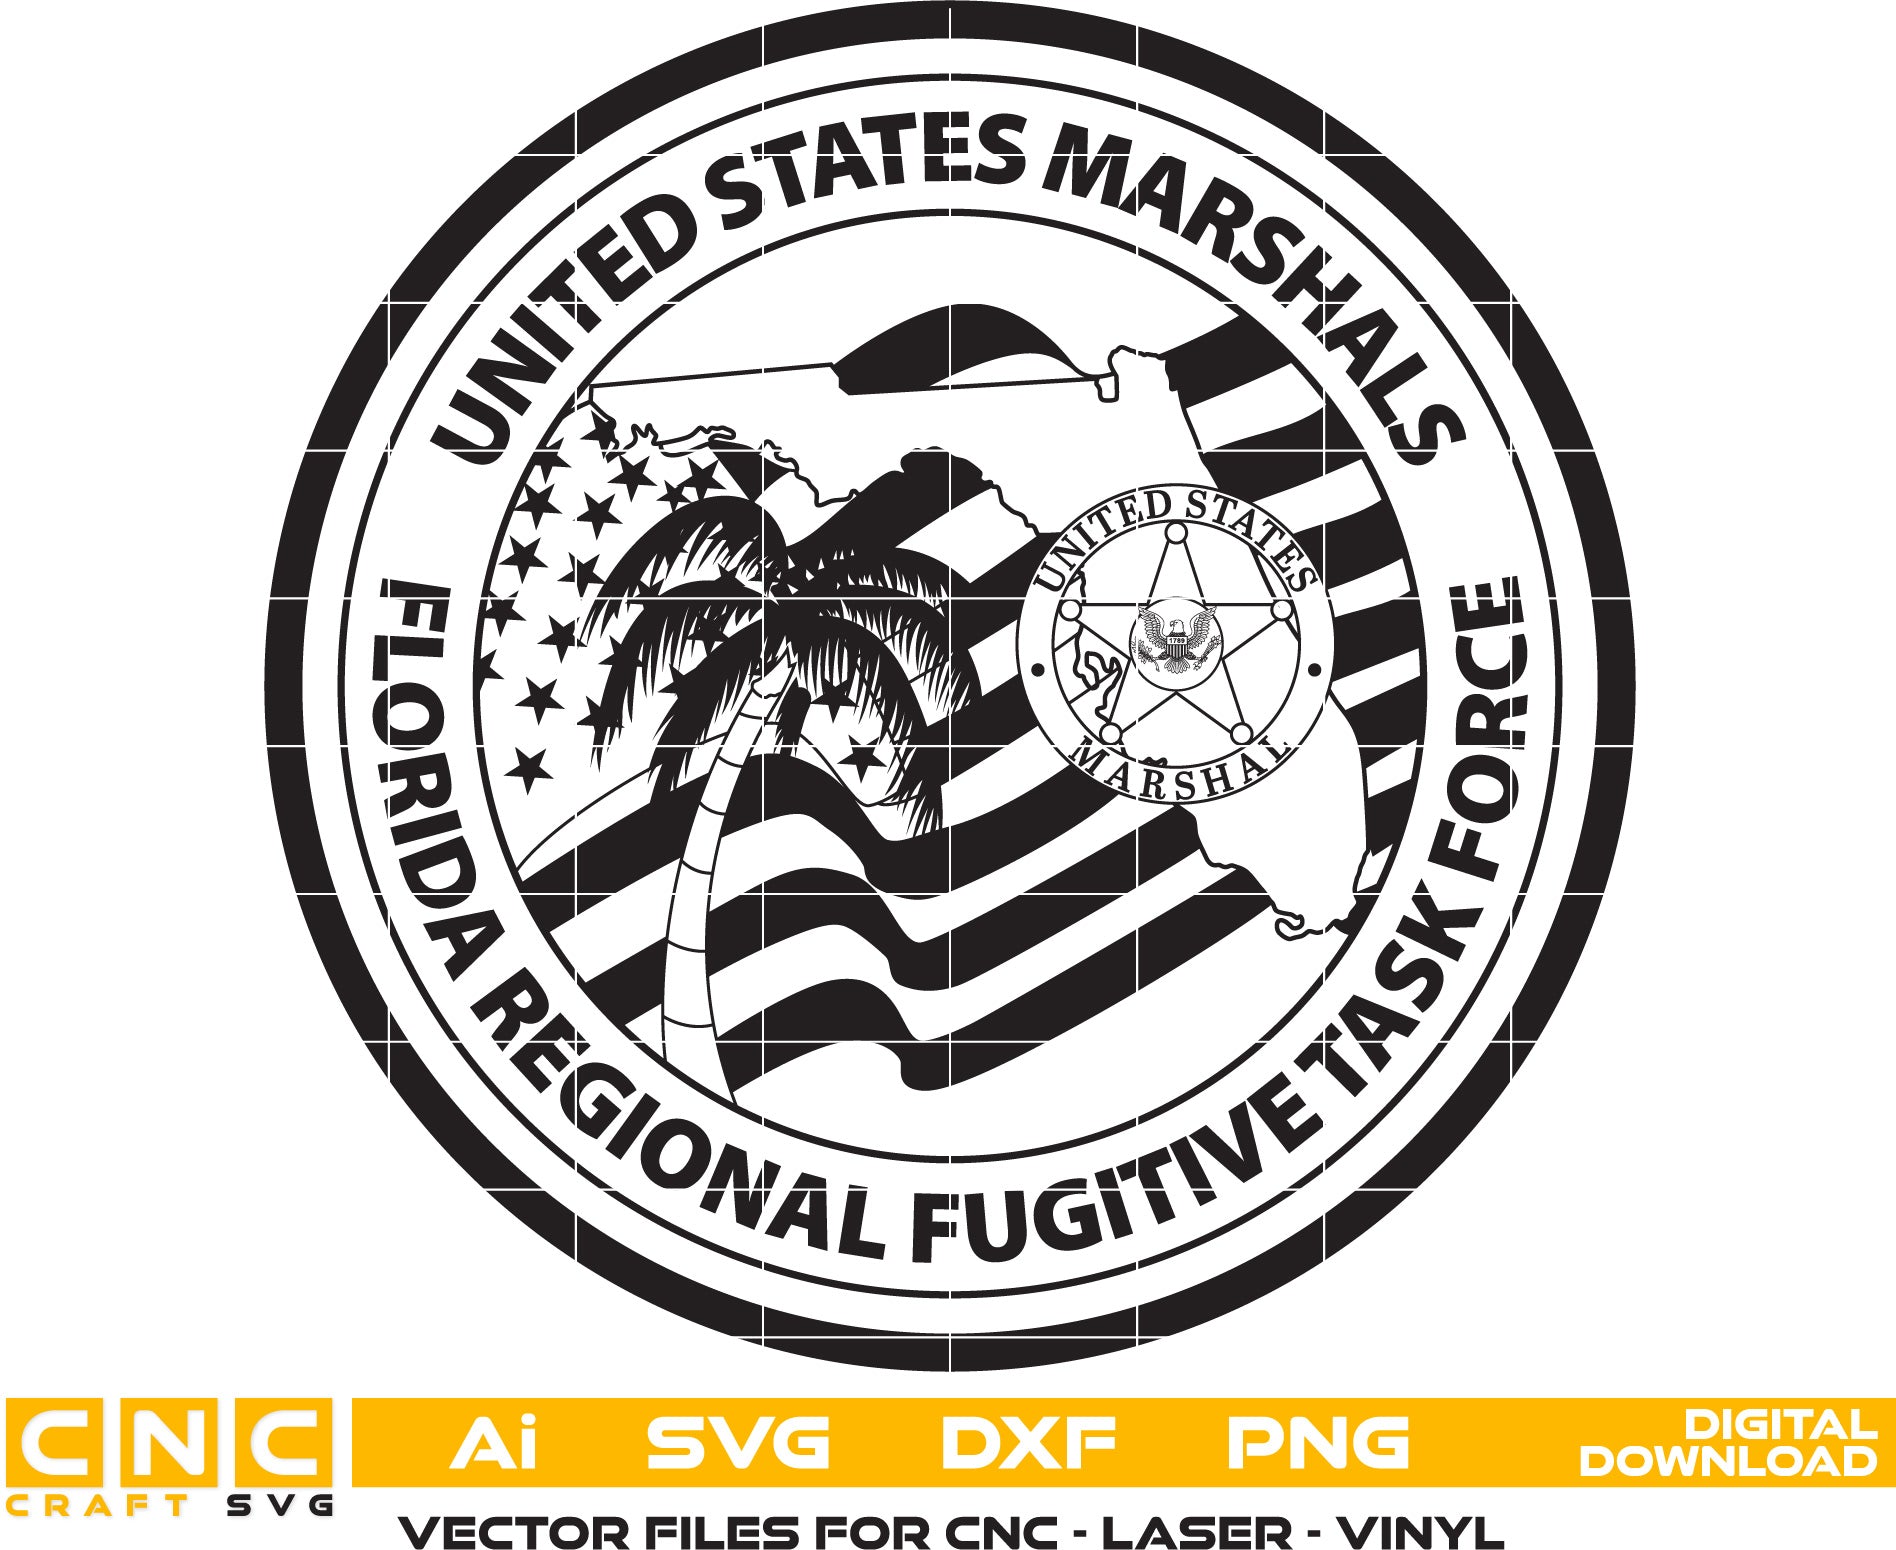 Marshals Florida Regional Fugitive Task Force Logo Vector Art, Ai,SVG, DXF, PNG, Digital Files for Laser Engraving, Woodworking & Printing